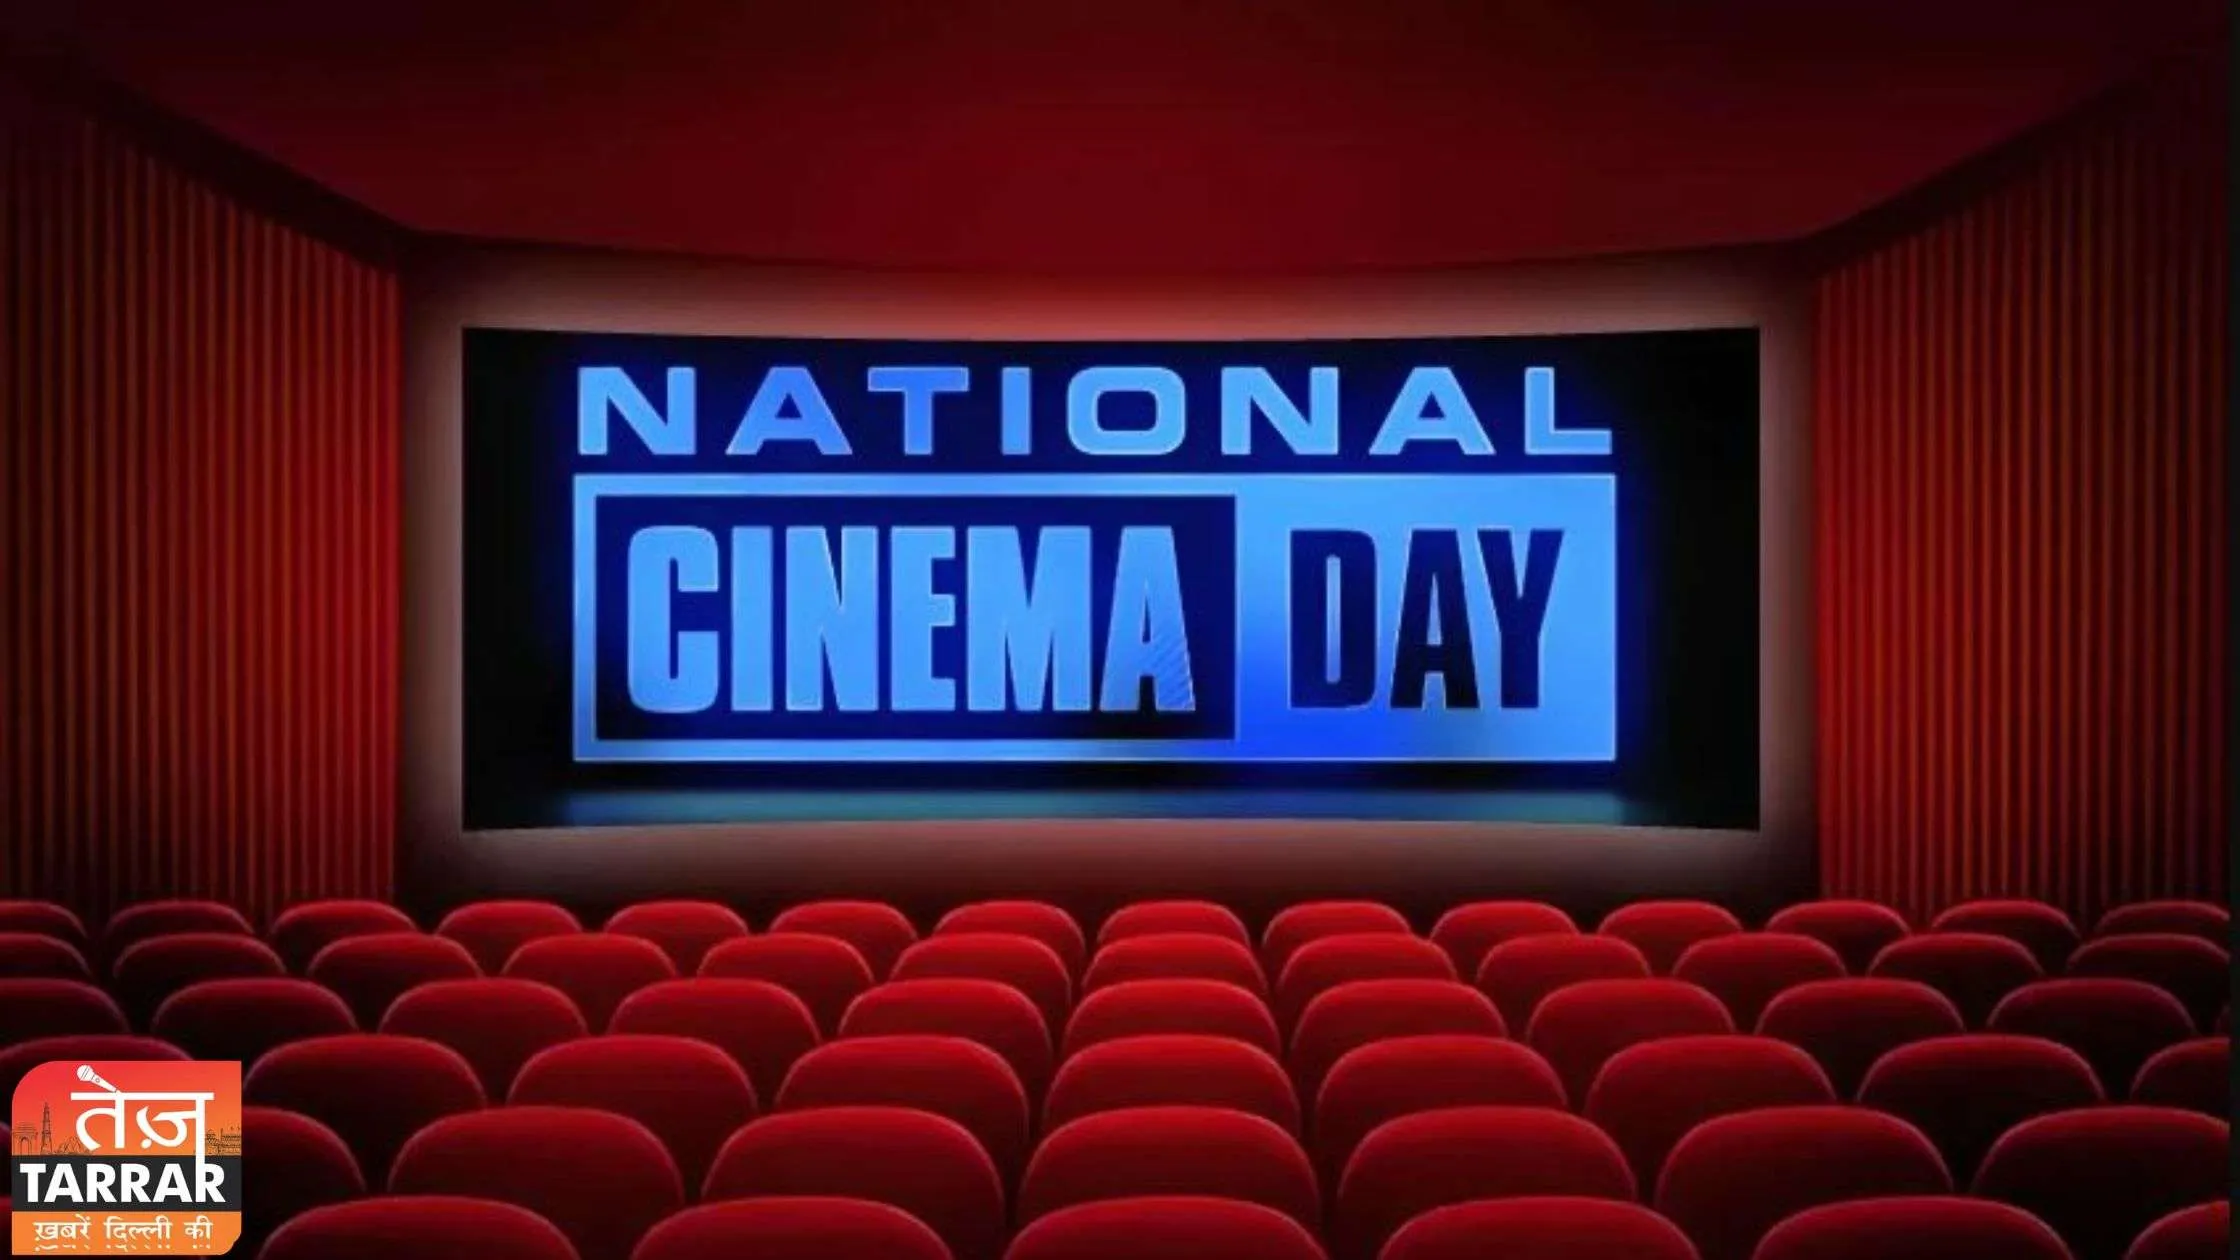 राष्ट्रीय सिनेमा दिवस 13 अक्टूबर को मनाया जाएगा, मल्टीप्लेक्स एसोसिएशन ऑफ इंडिया